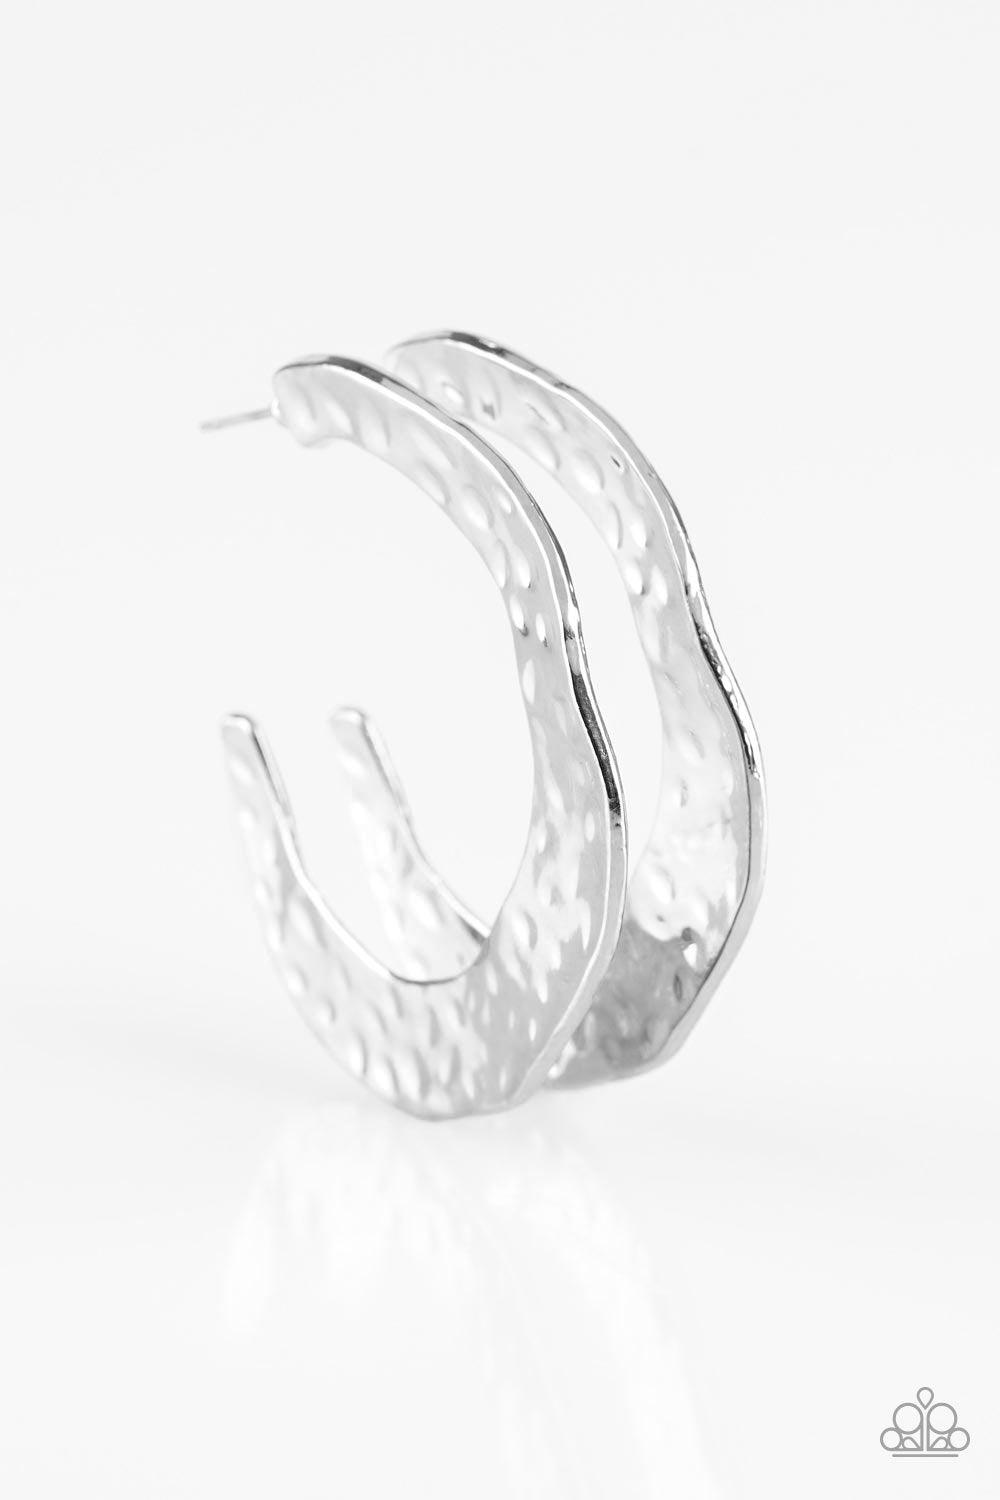 Silverette® cups + O-Feel™ ring REGULAR – Nurture Her Boutique